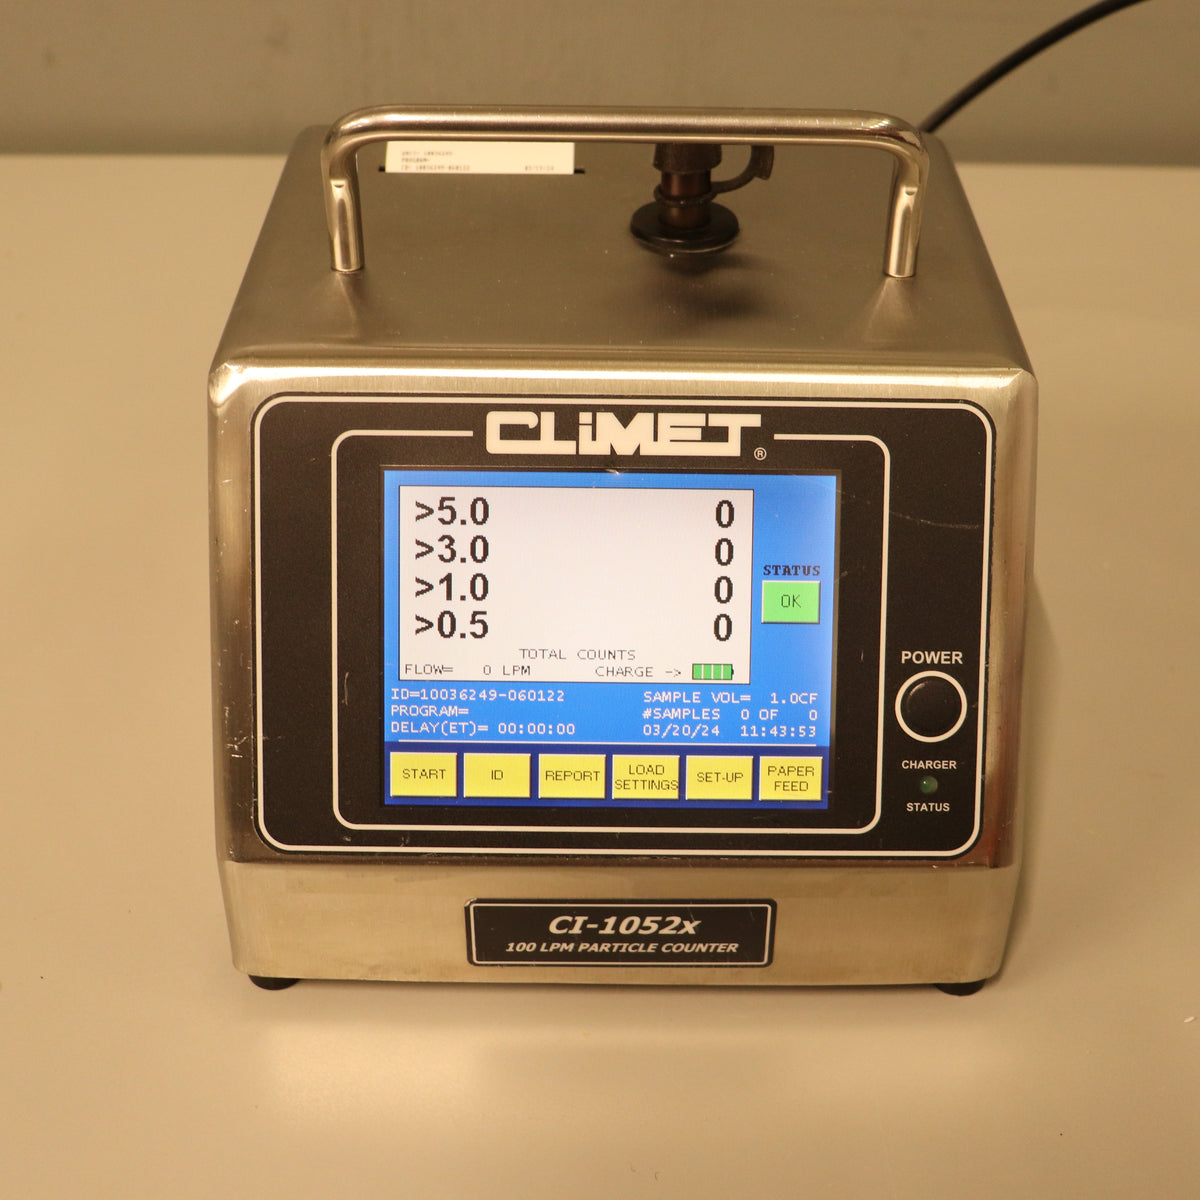 Climet CI-1052x Airborne Particle Counter CI-1052x-01